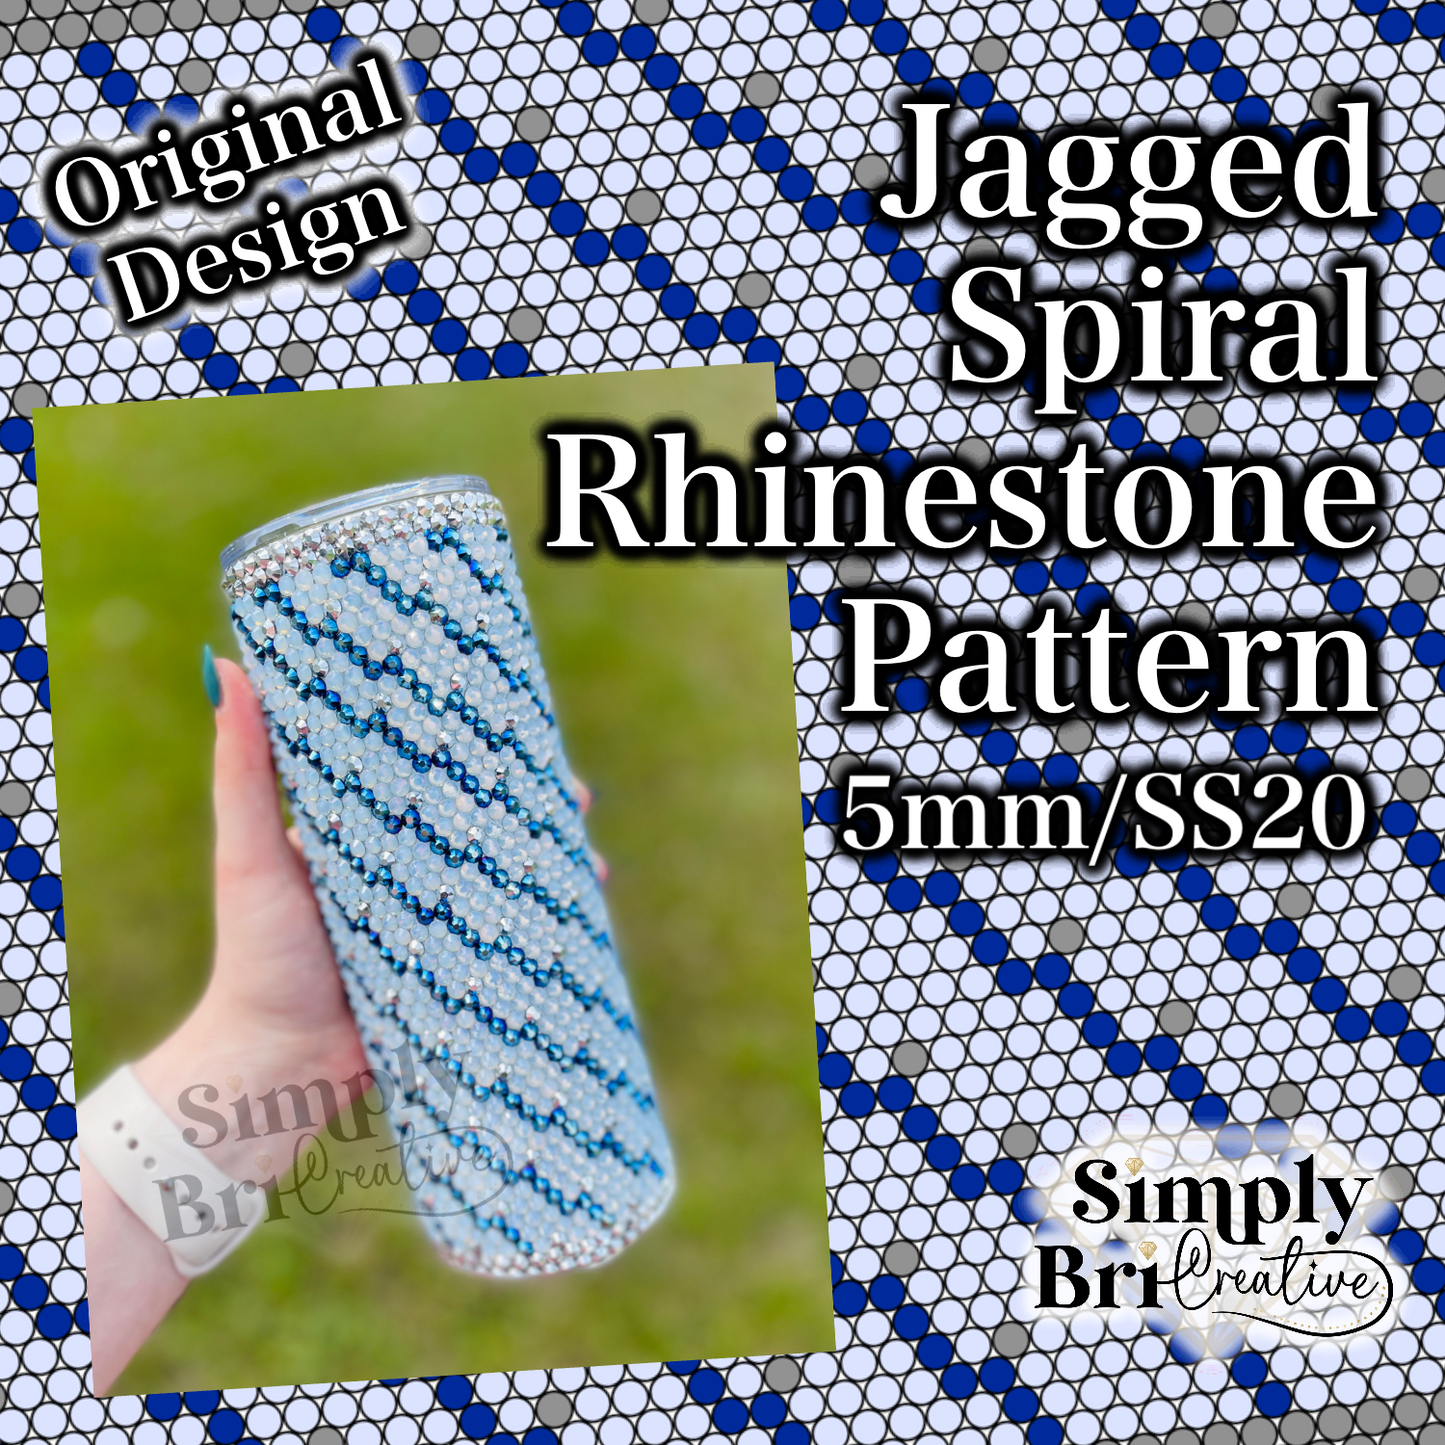 Jagged Spiral Rhinestone Pattern (5mm/SS20)